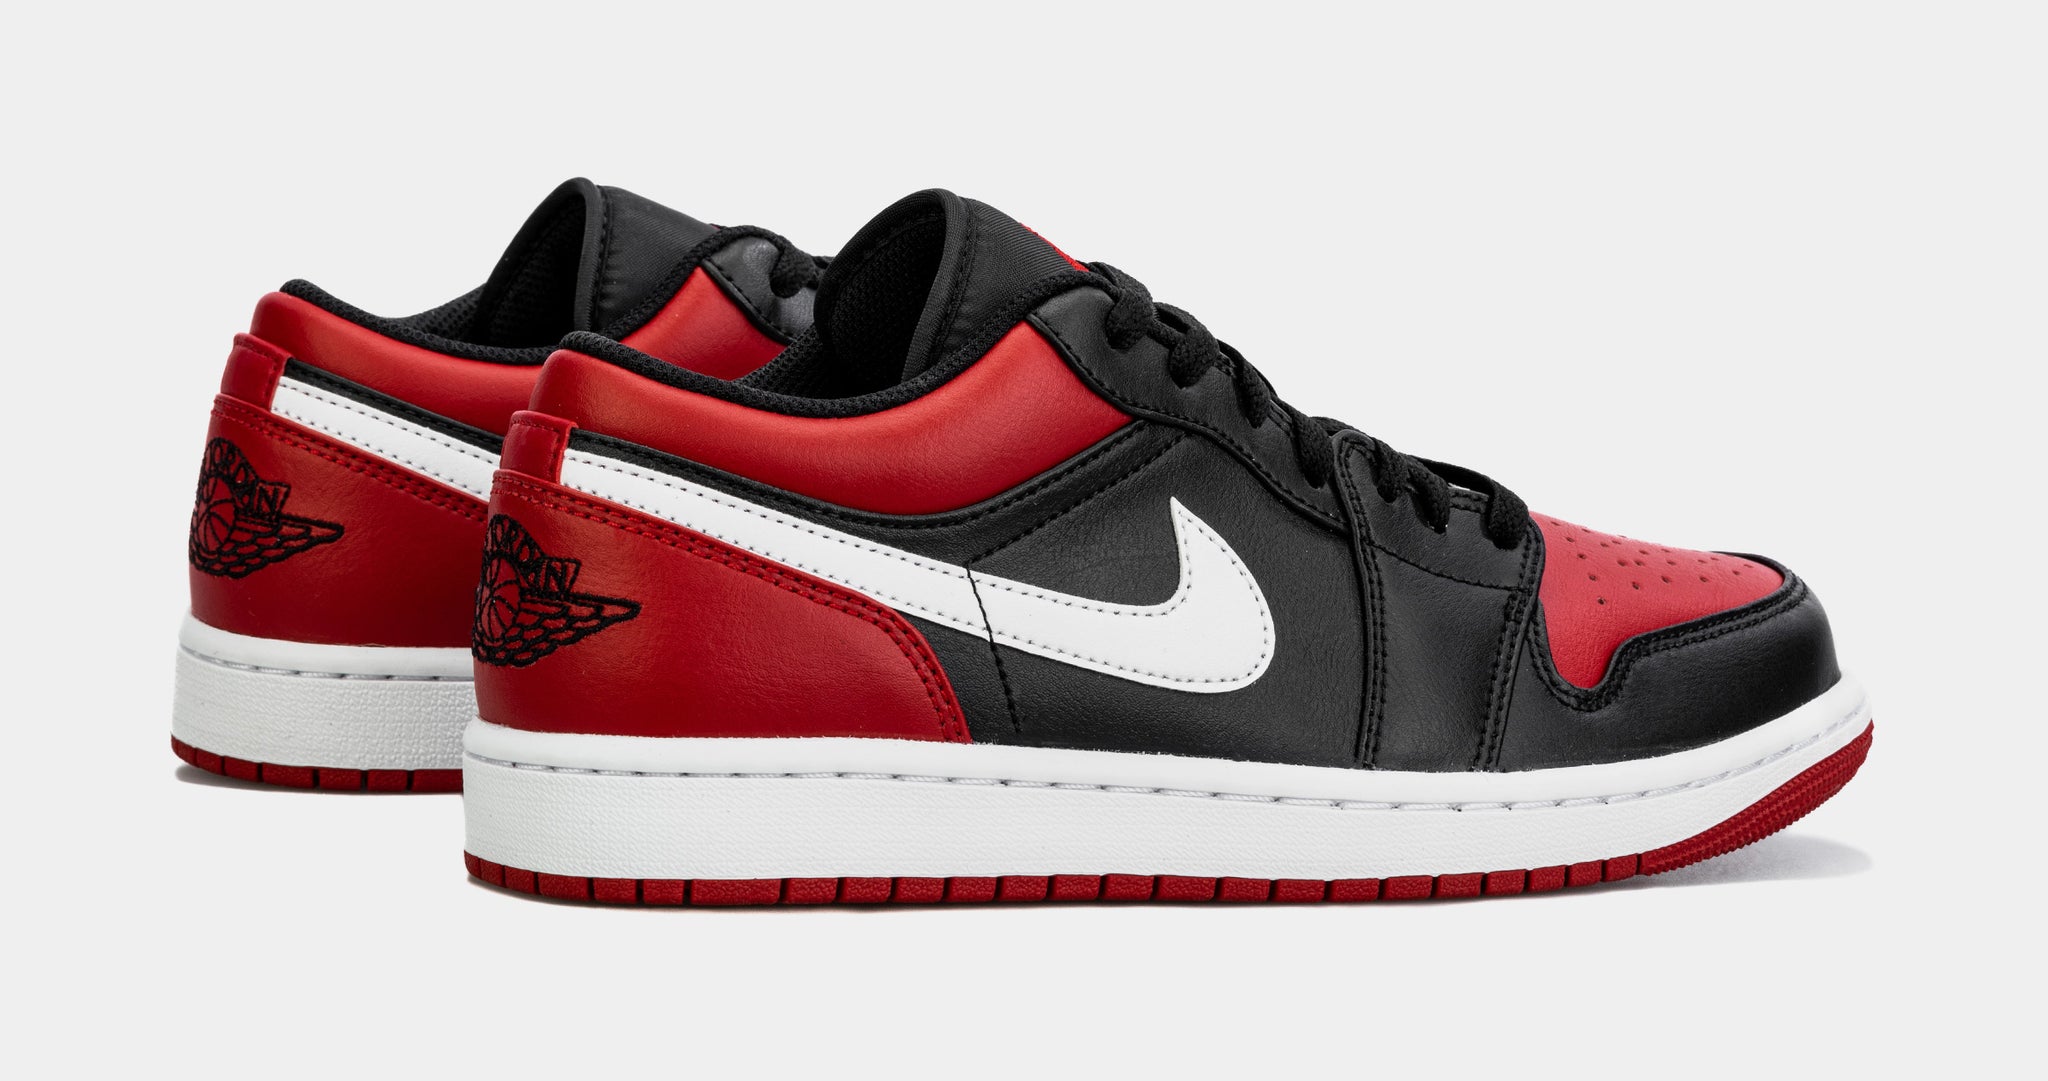 Air Jordan 1 Retro Low Alternate Bred Toe Mens Lifestyle Shoes (Black/Red)